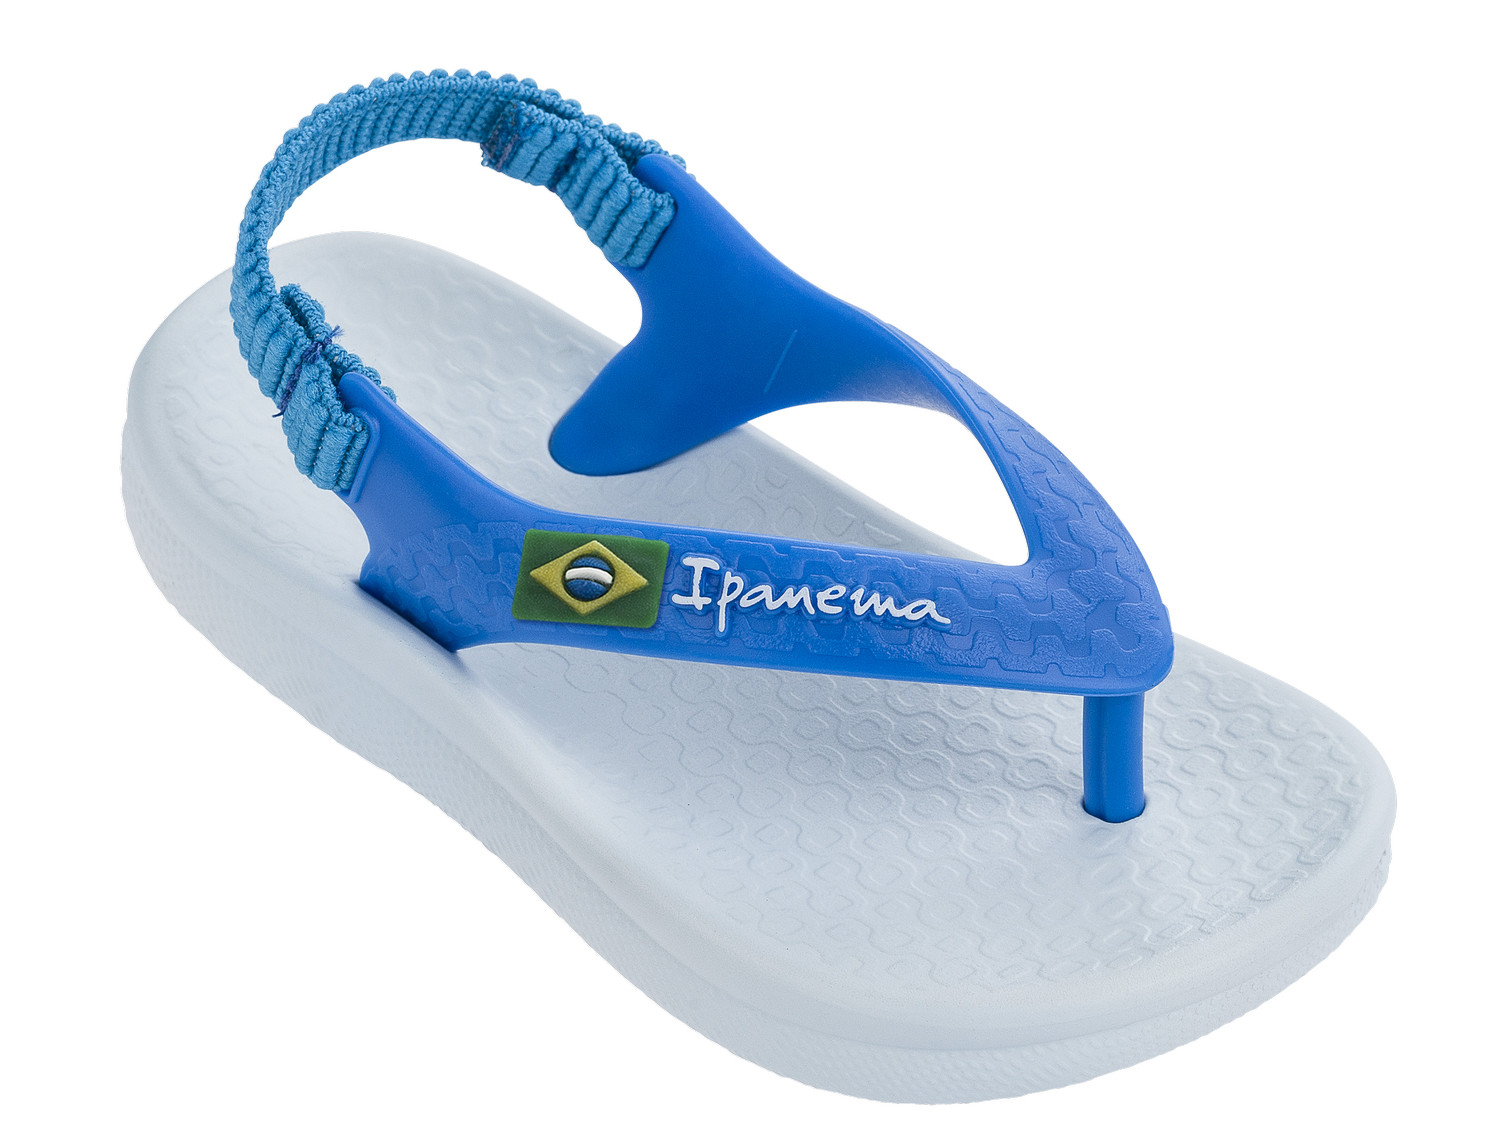 Ipanema Unisex Babies First Sandals